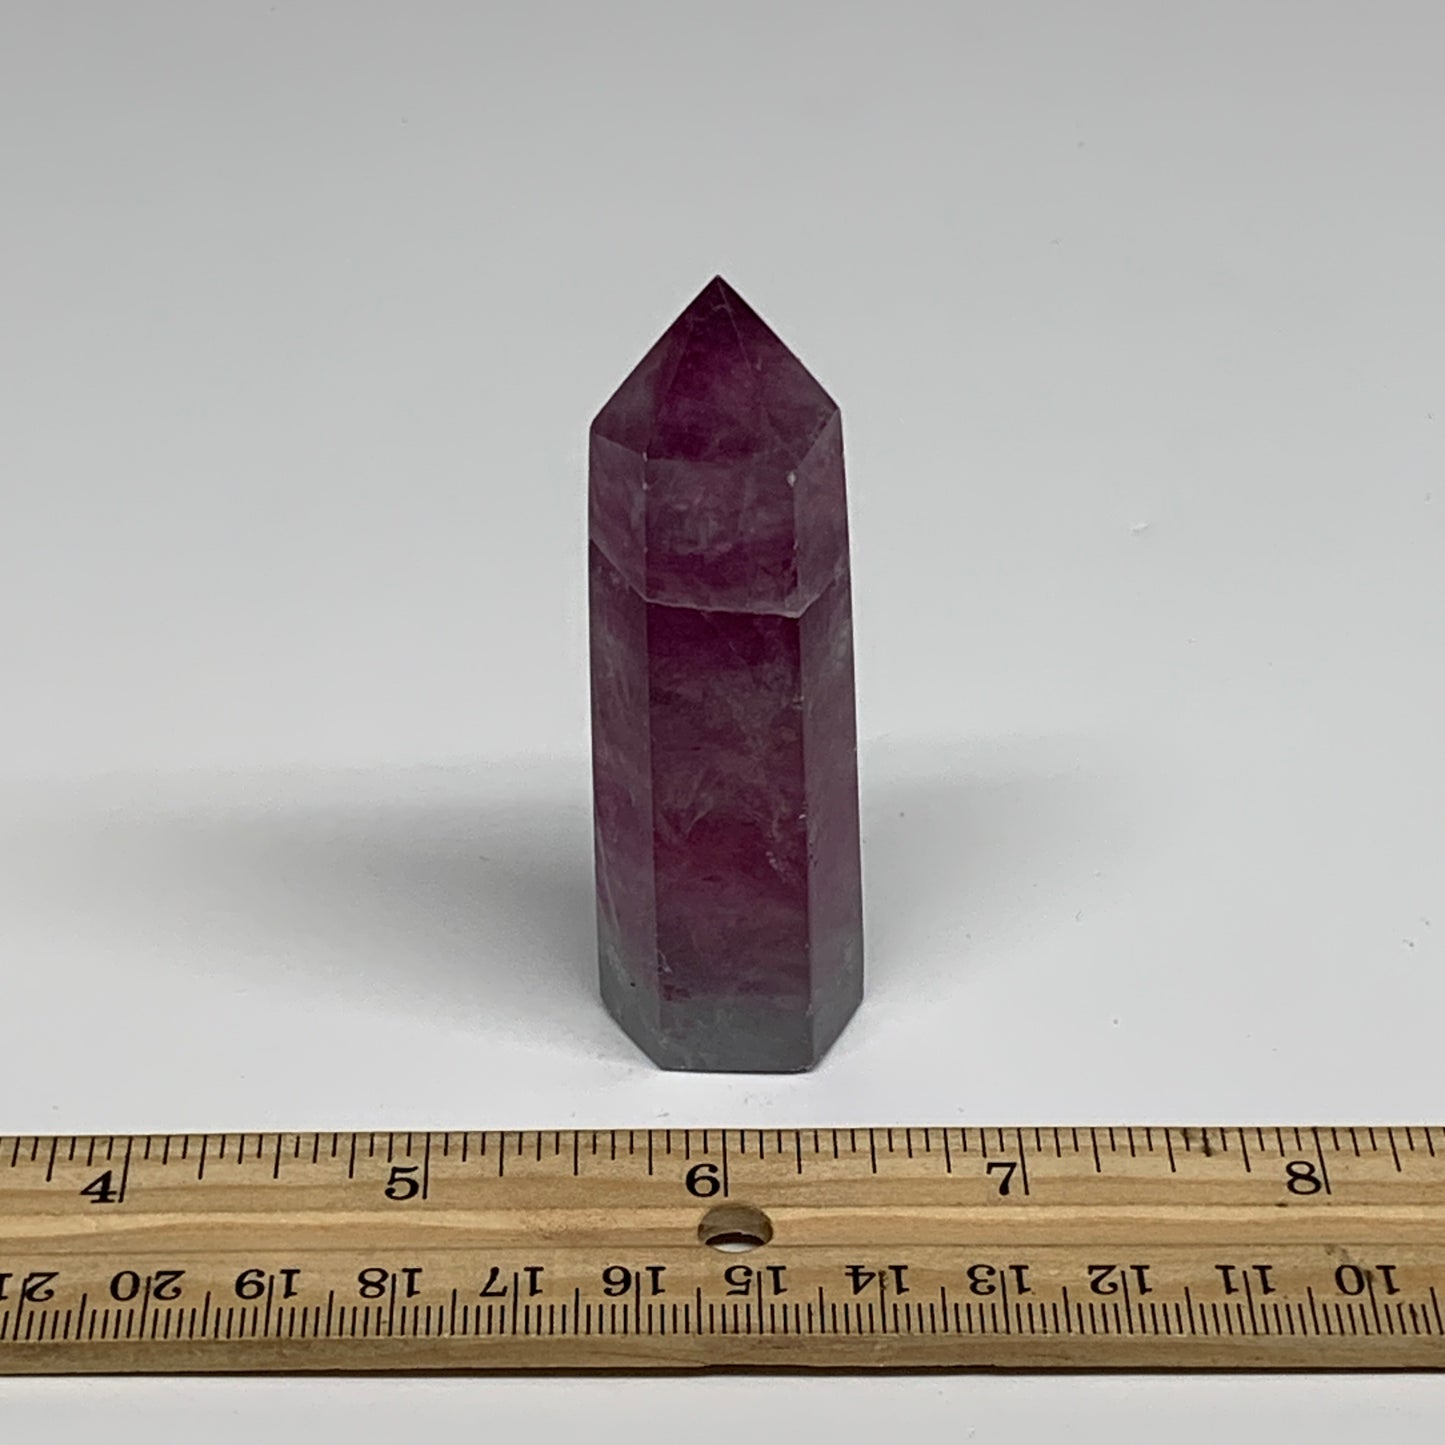 75g, 3"x0.8", Natural Watermelon Fluorite Tower Obelisk Point Crystal, B31373